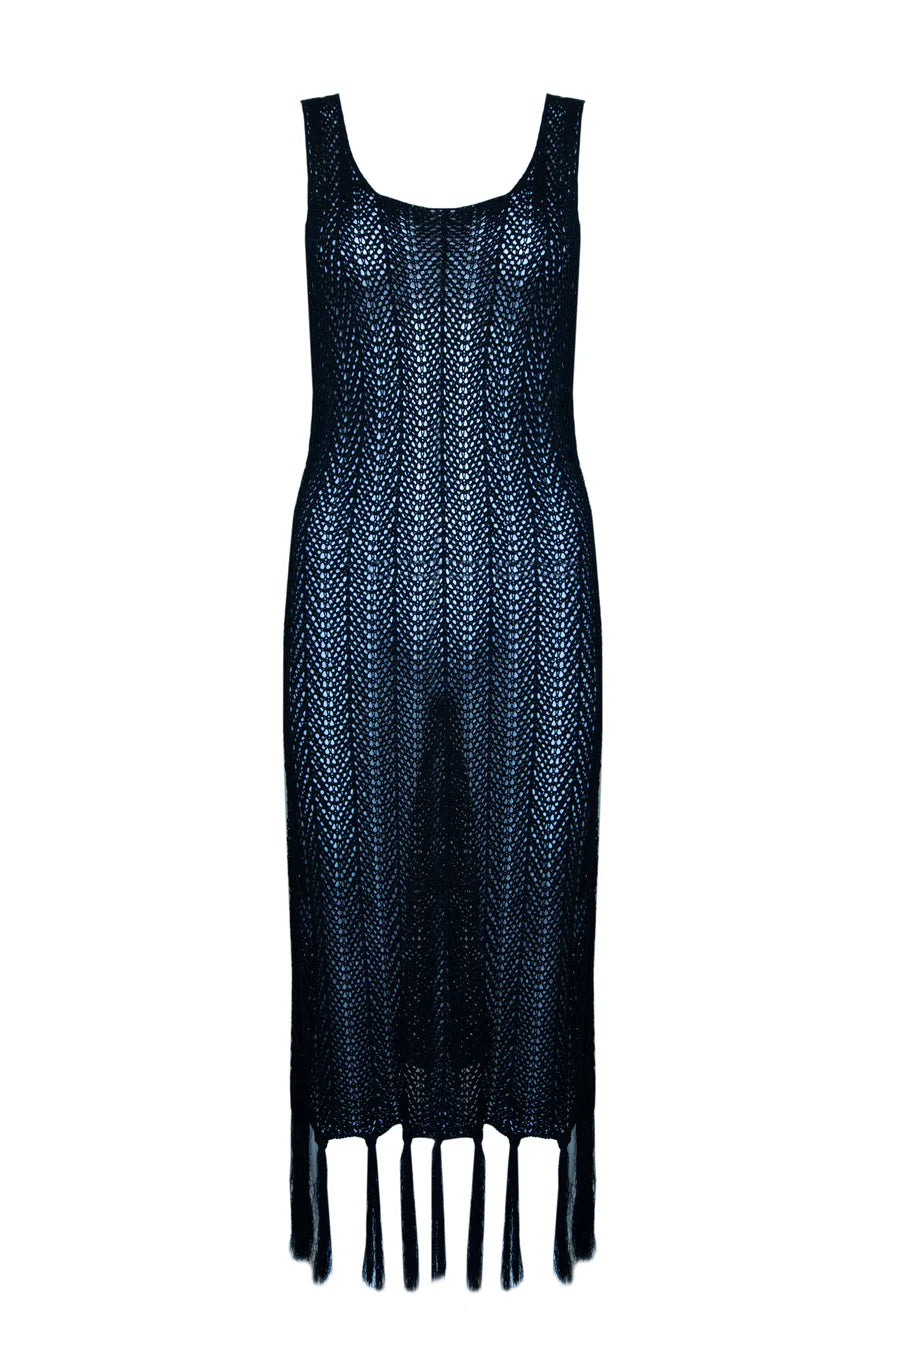 Jovonna Frans Knitted Dress - Black